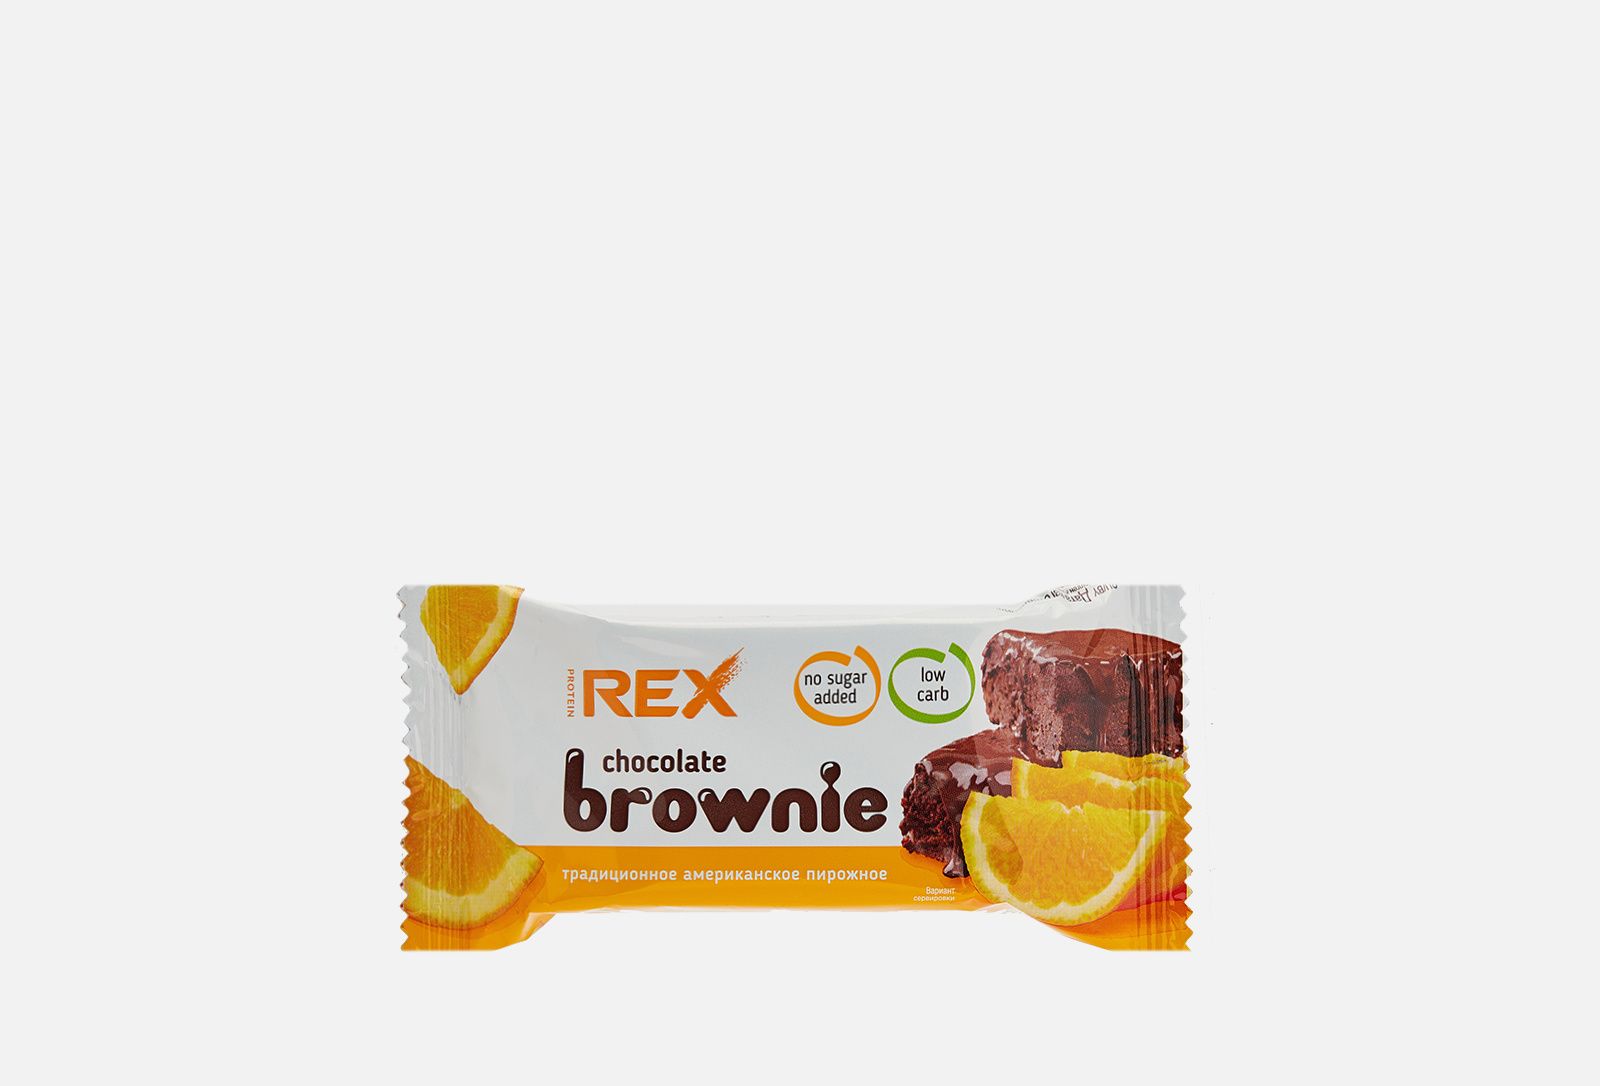 Rex пирожное протеиновое. Пирожное Lamington Protein Rex. Пирожное Protein Rex Brownie. Protein Rex пирожное протеин Брауни апельсин. Пирожное протеиновое Protein Rex Брауни с апельсином.